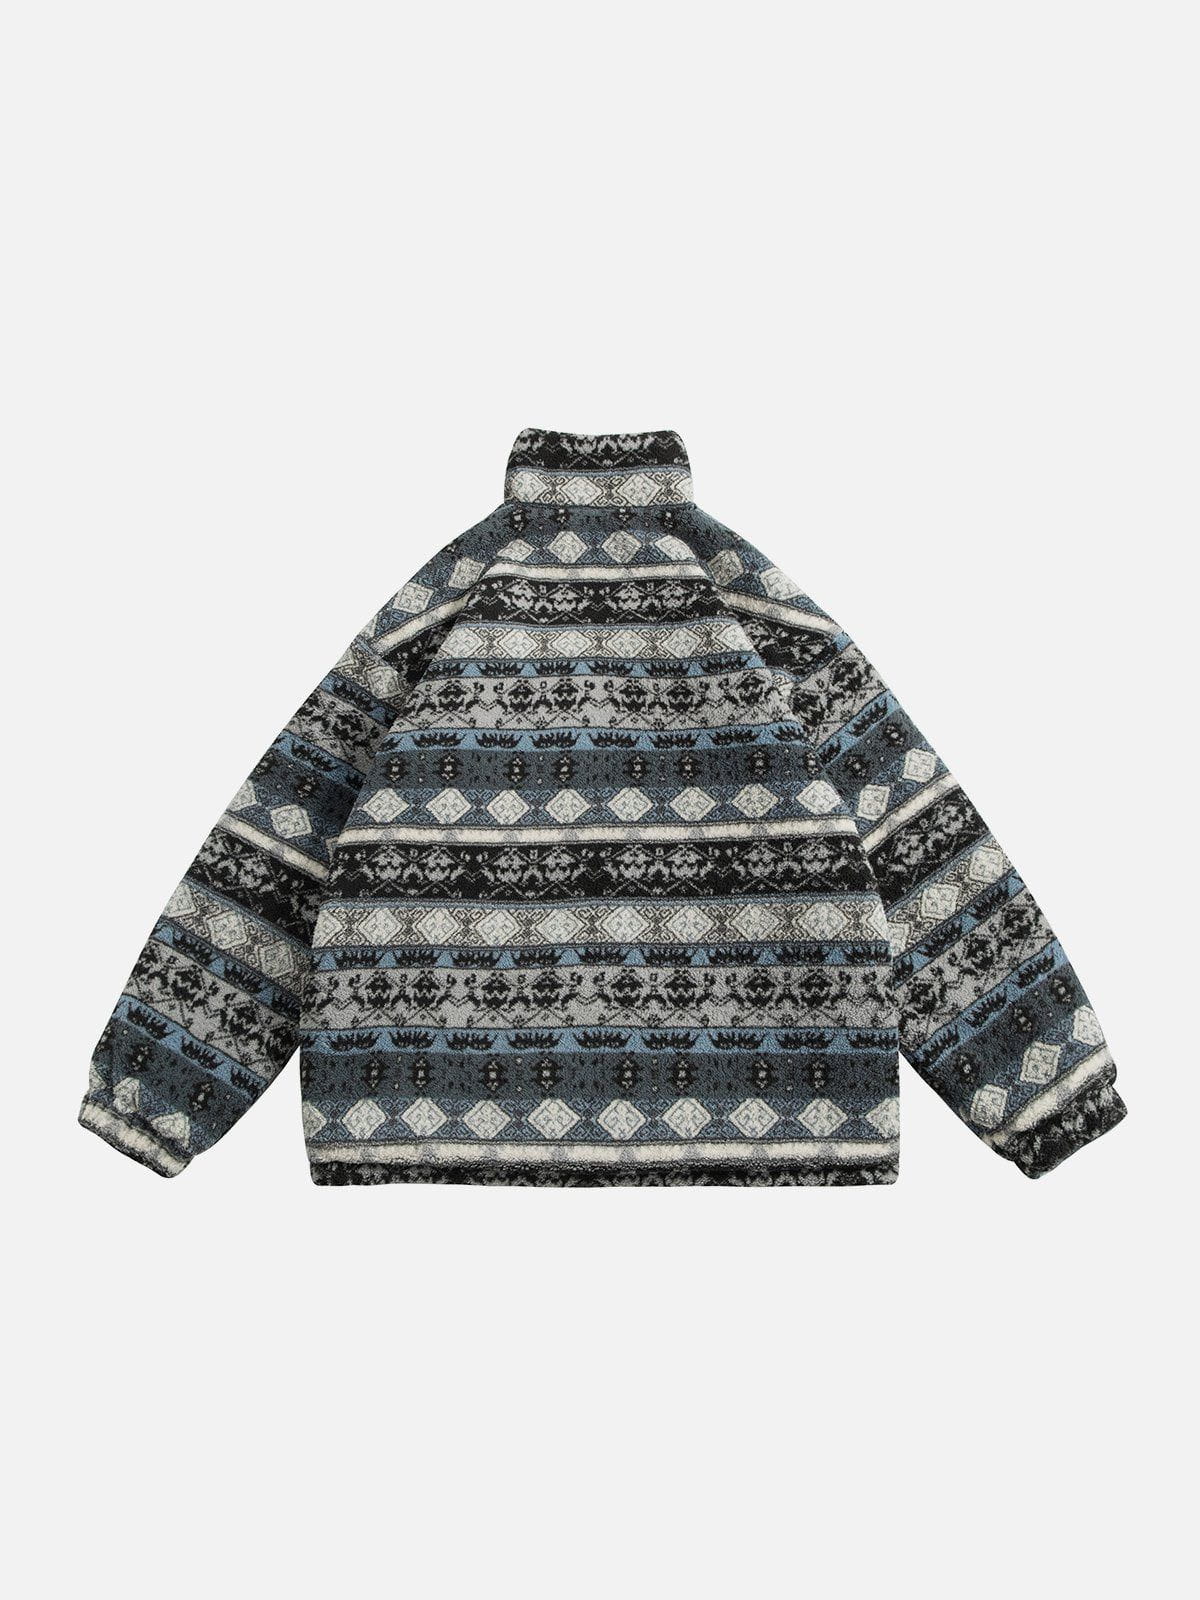 Sneakerland™ - Tribal Vintage Pattern Winter Coat